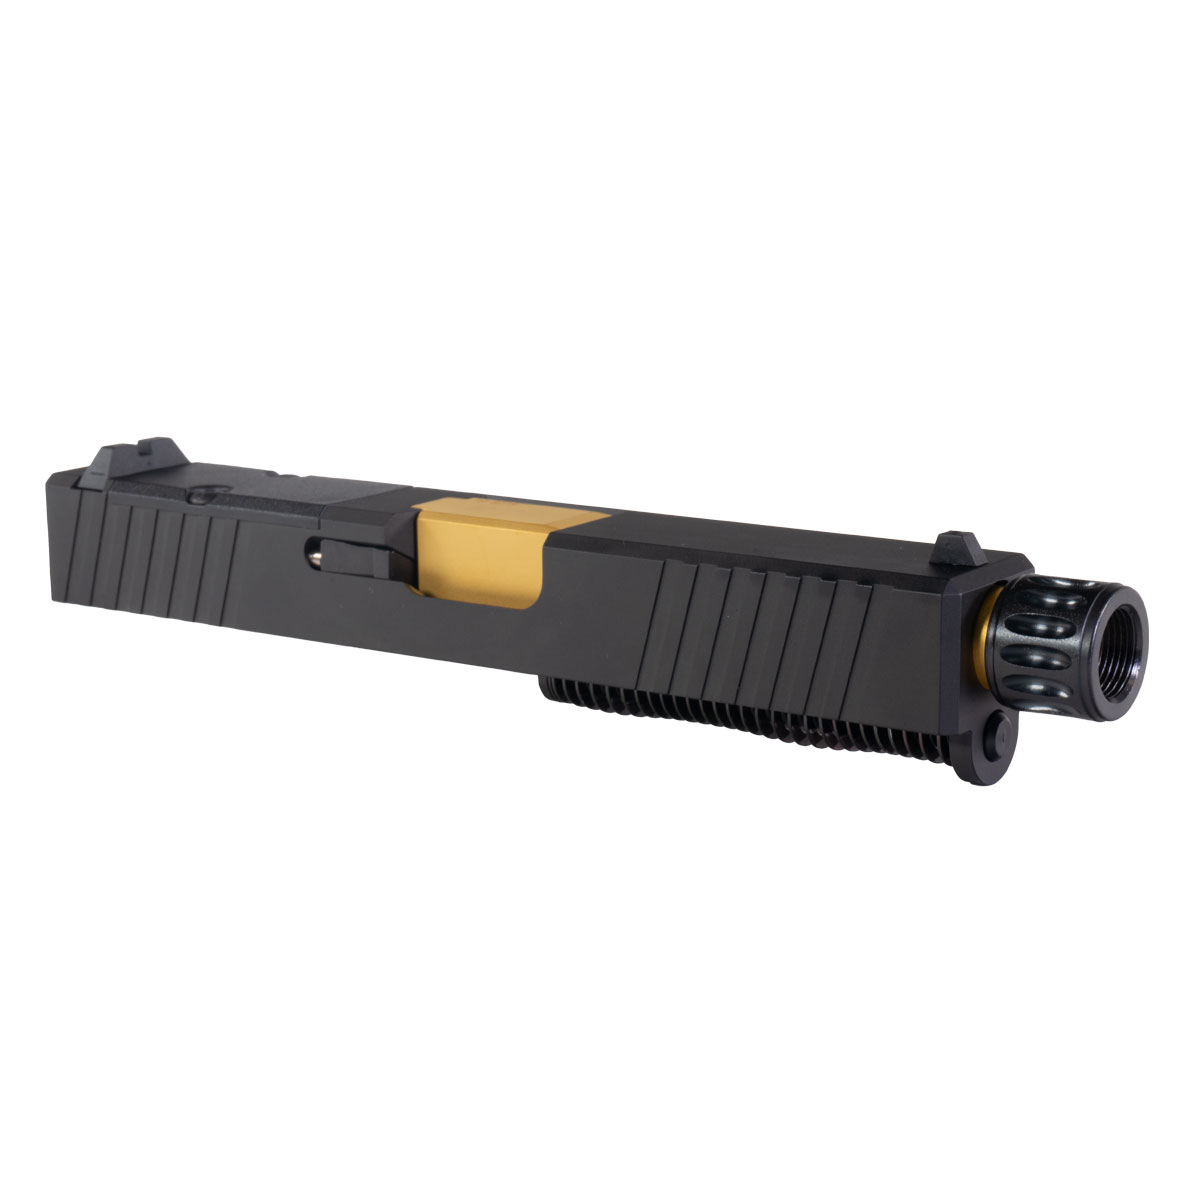 MMC 'Bloei' 9mm Complete Slide Kit - Glock 19  Compatible